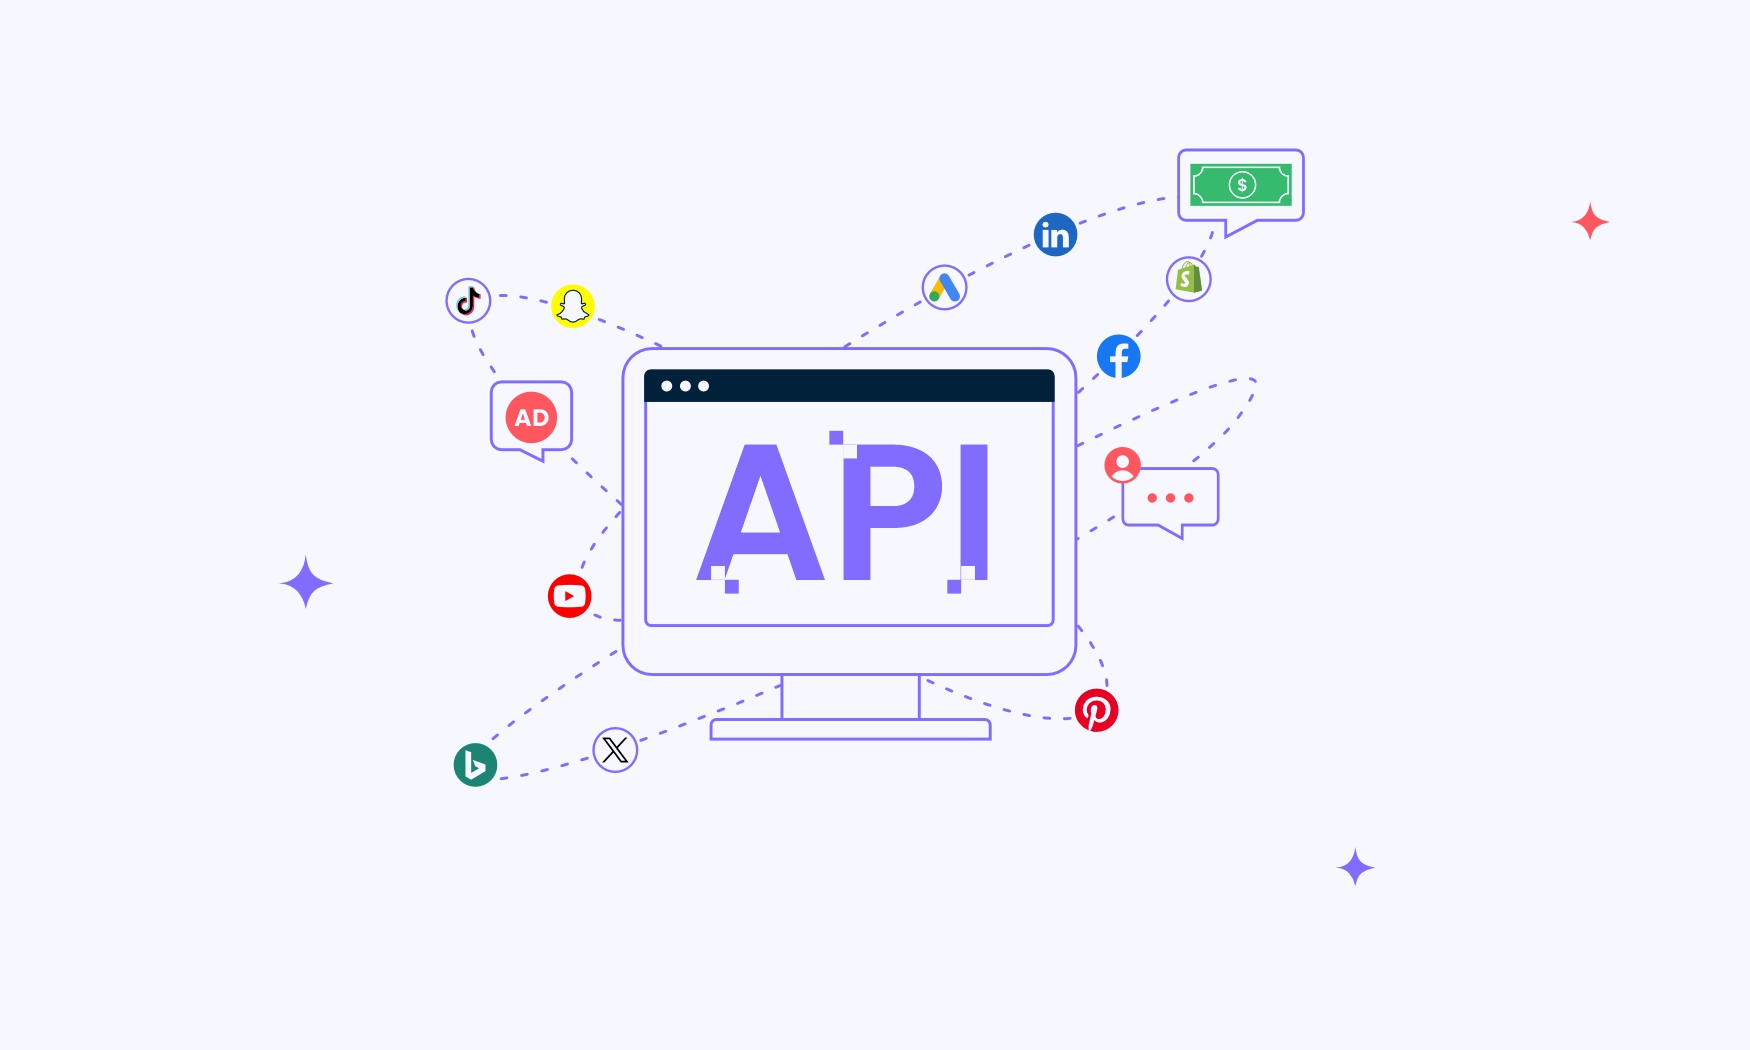 conversion API tracking